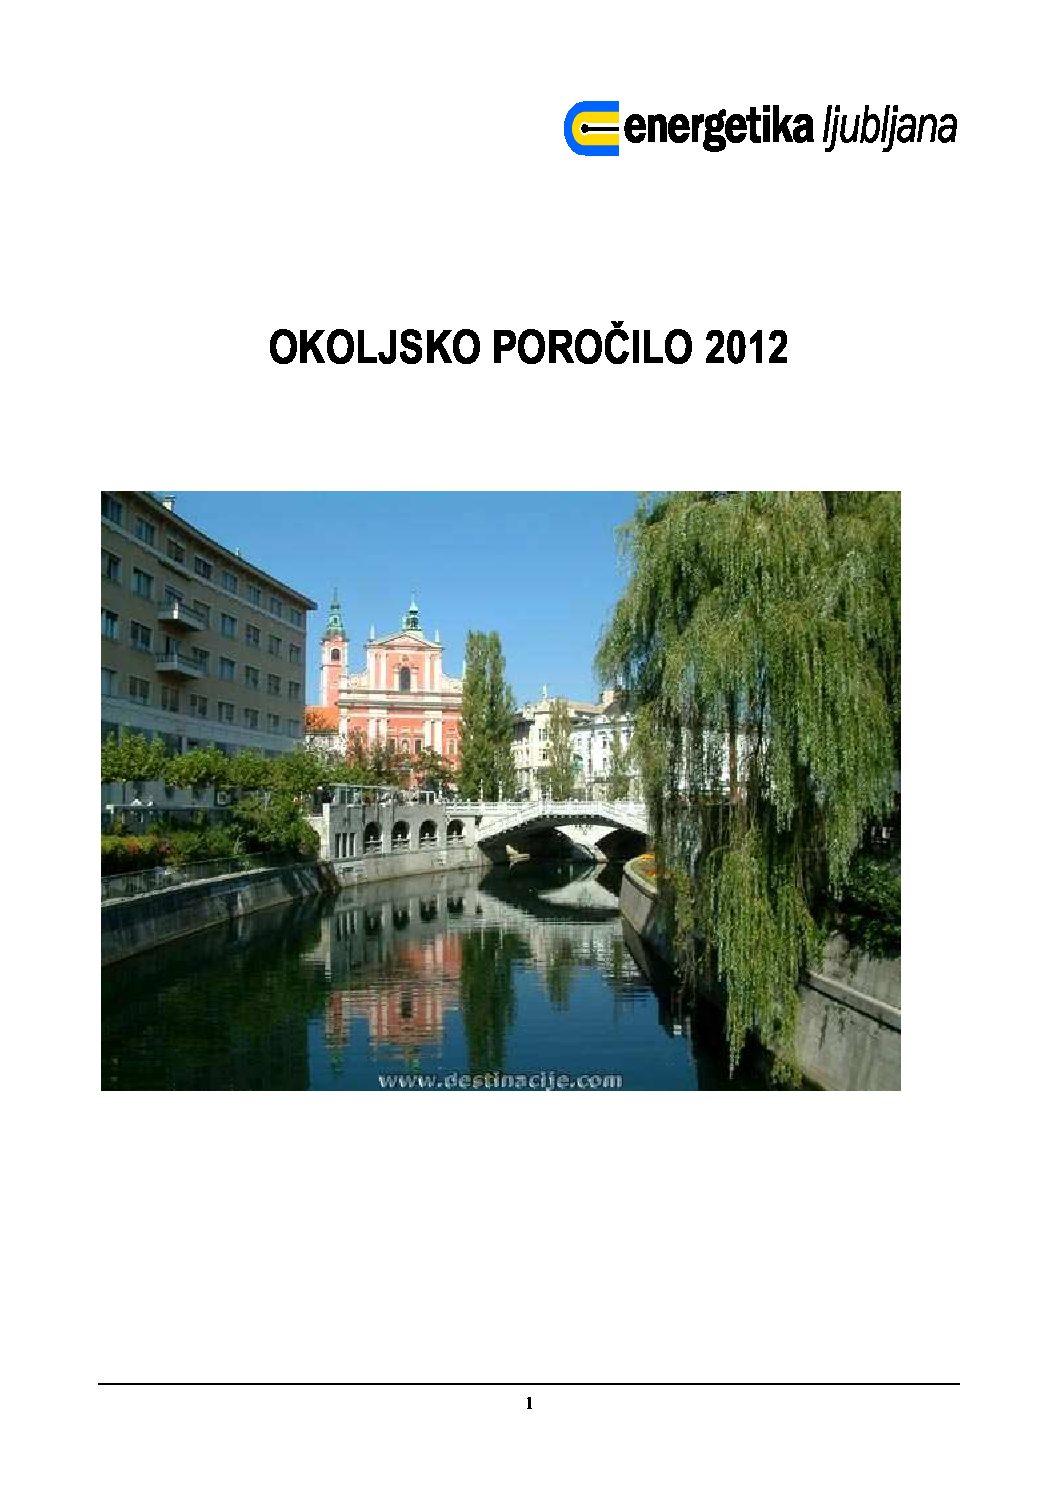 Okoljsko porocilo Energetika Ljubljana 2012 pdf